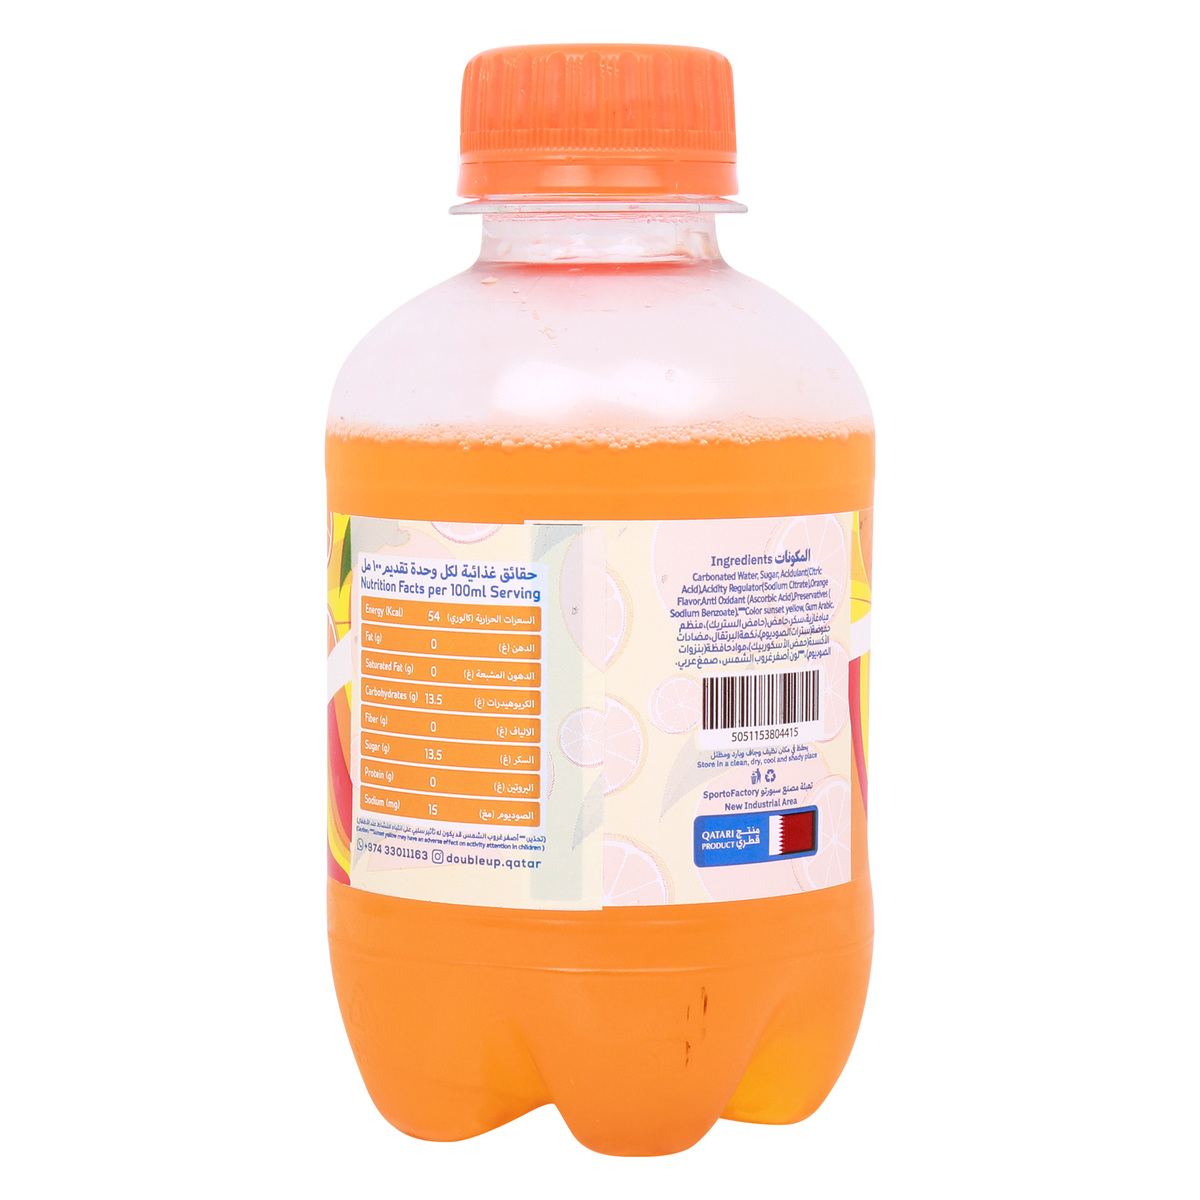 Double Up Orange Pet Bottle Carbonated Drinks 200 ml